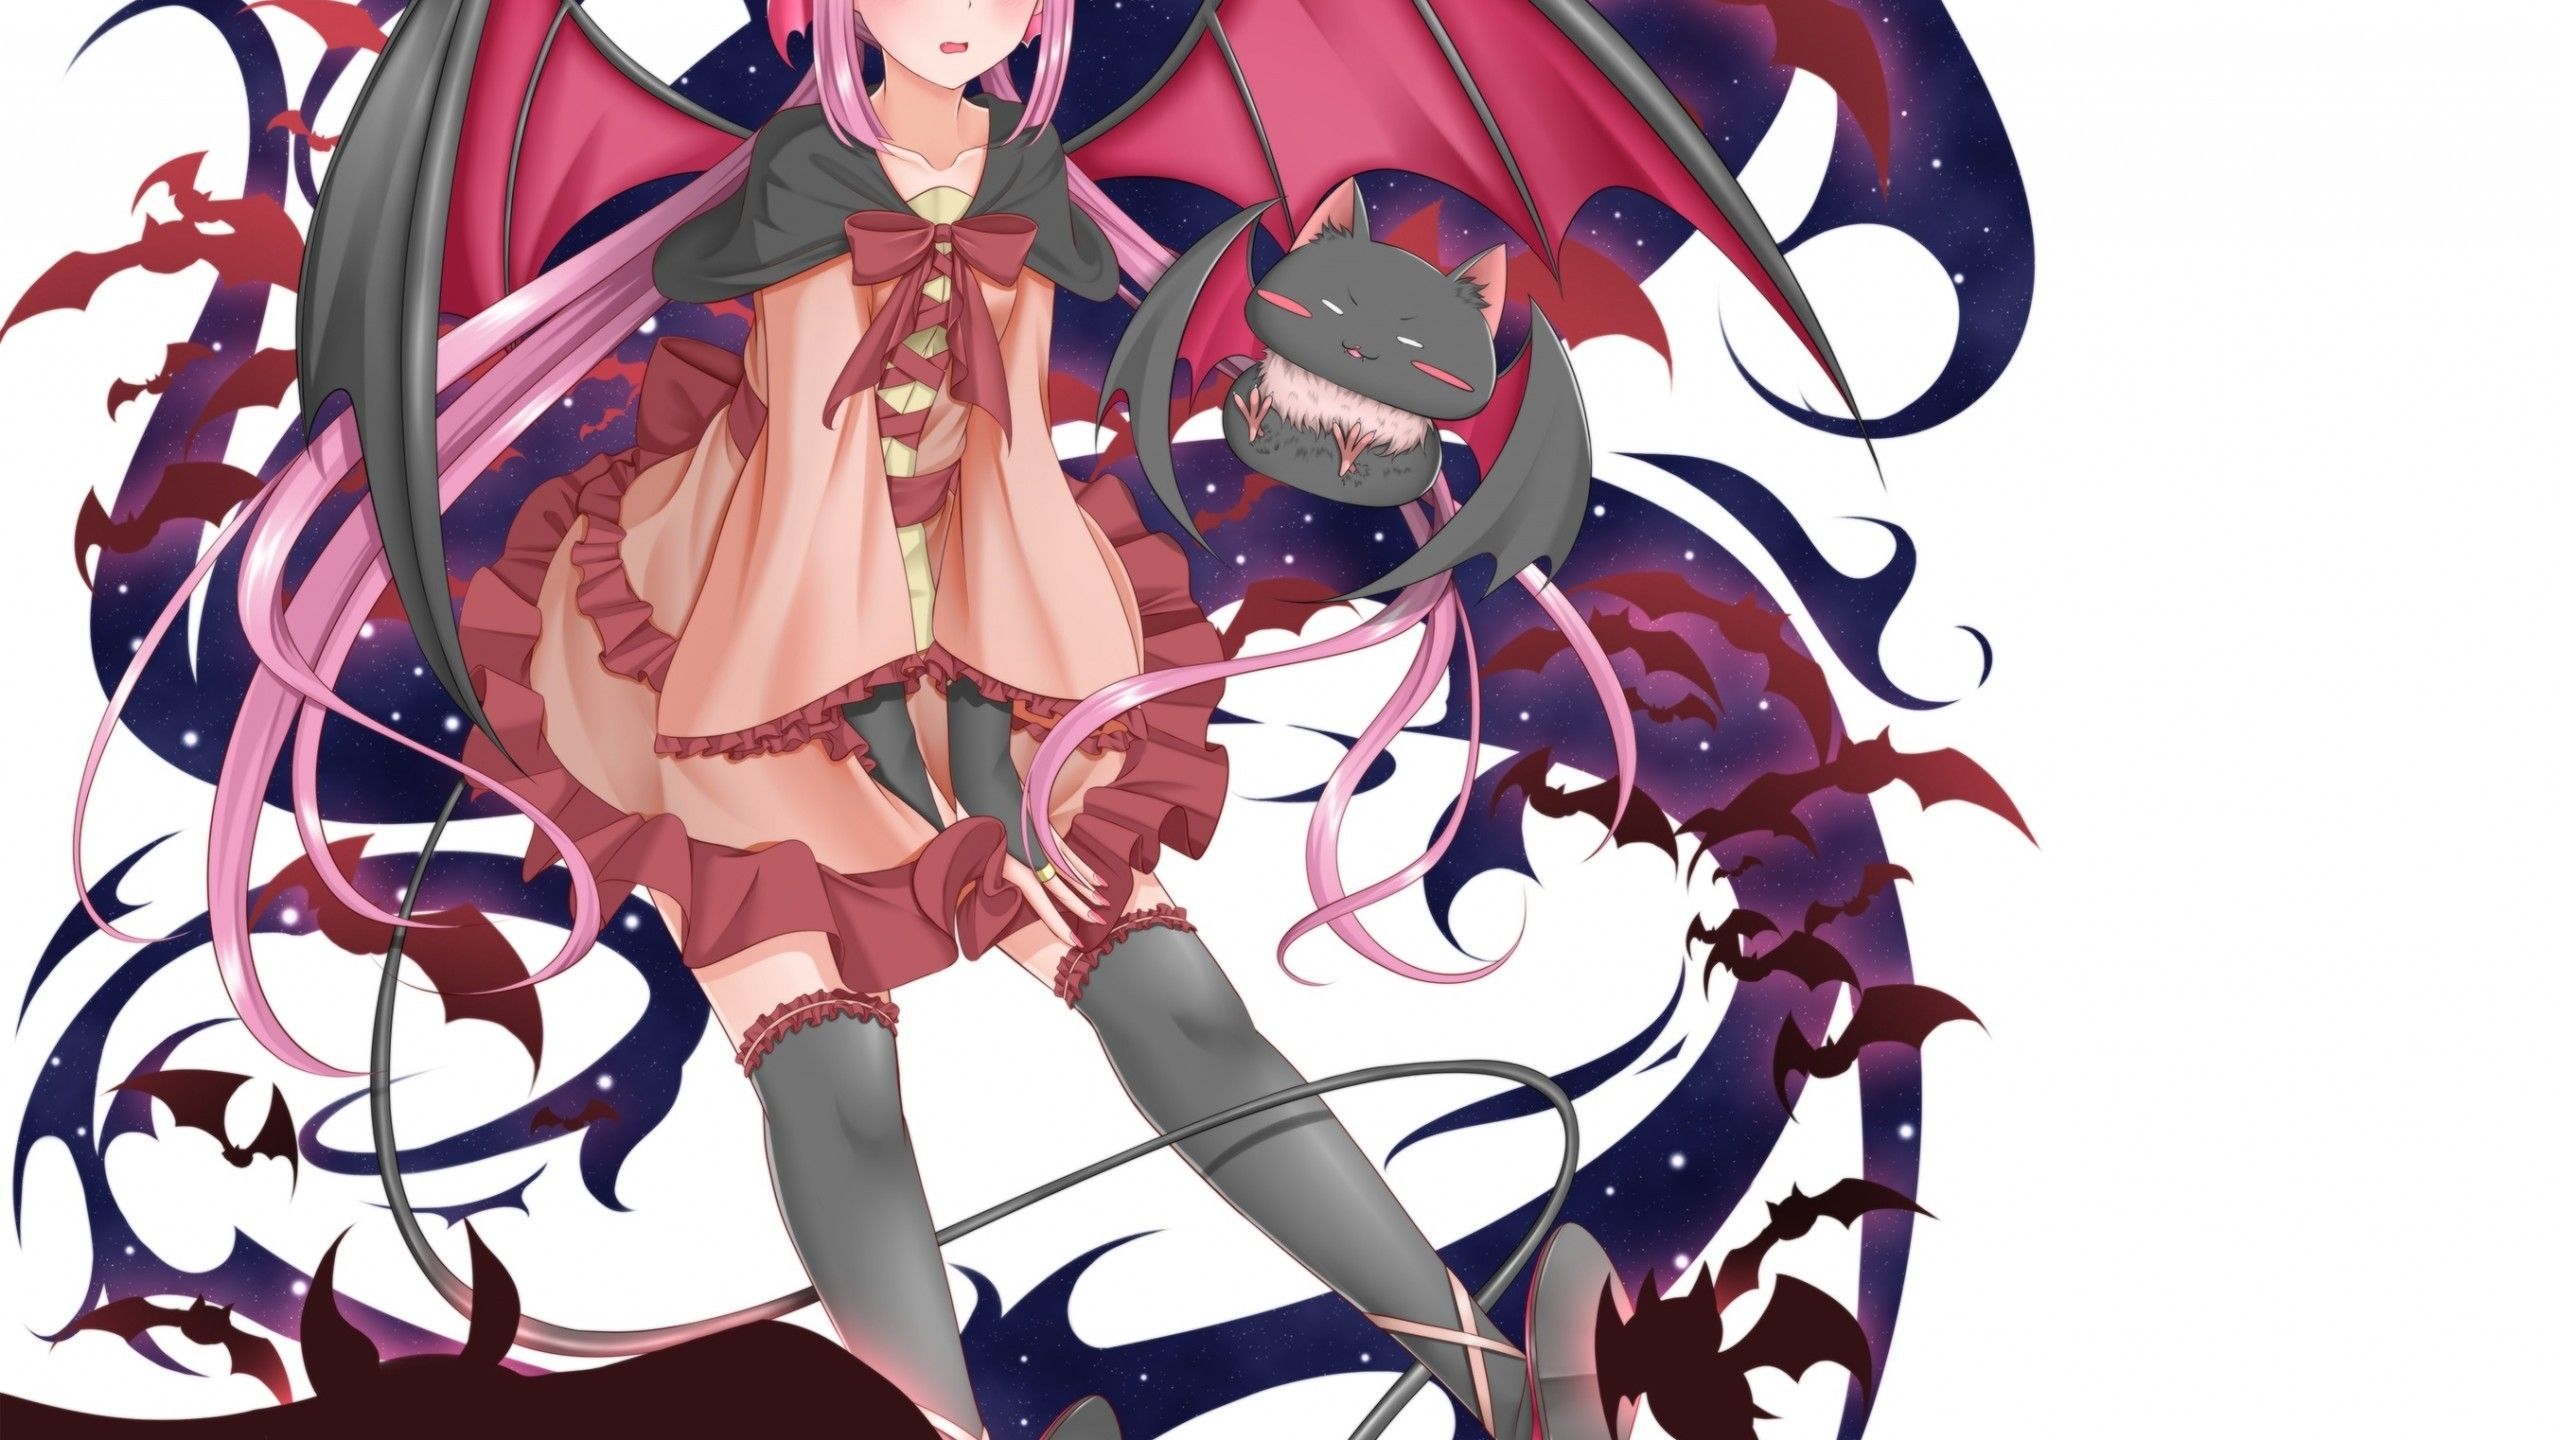 Cute Demon Anime Girl Wallpapers - Wallpaper Cave